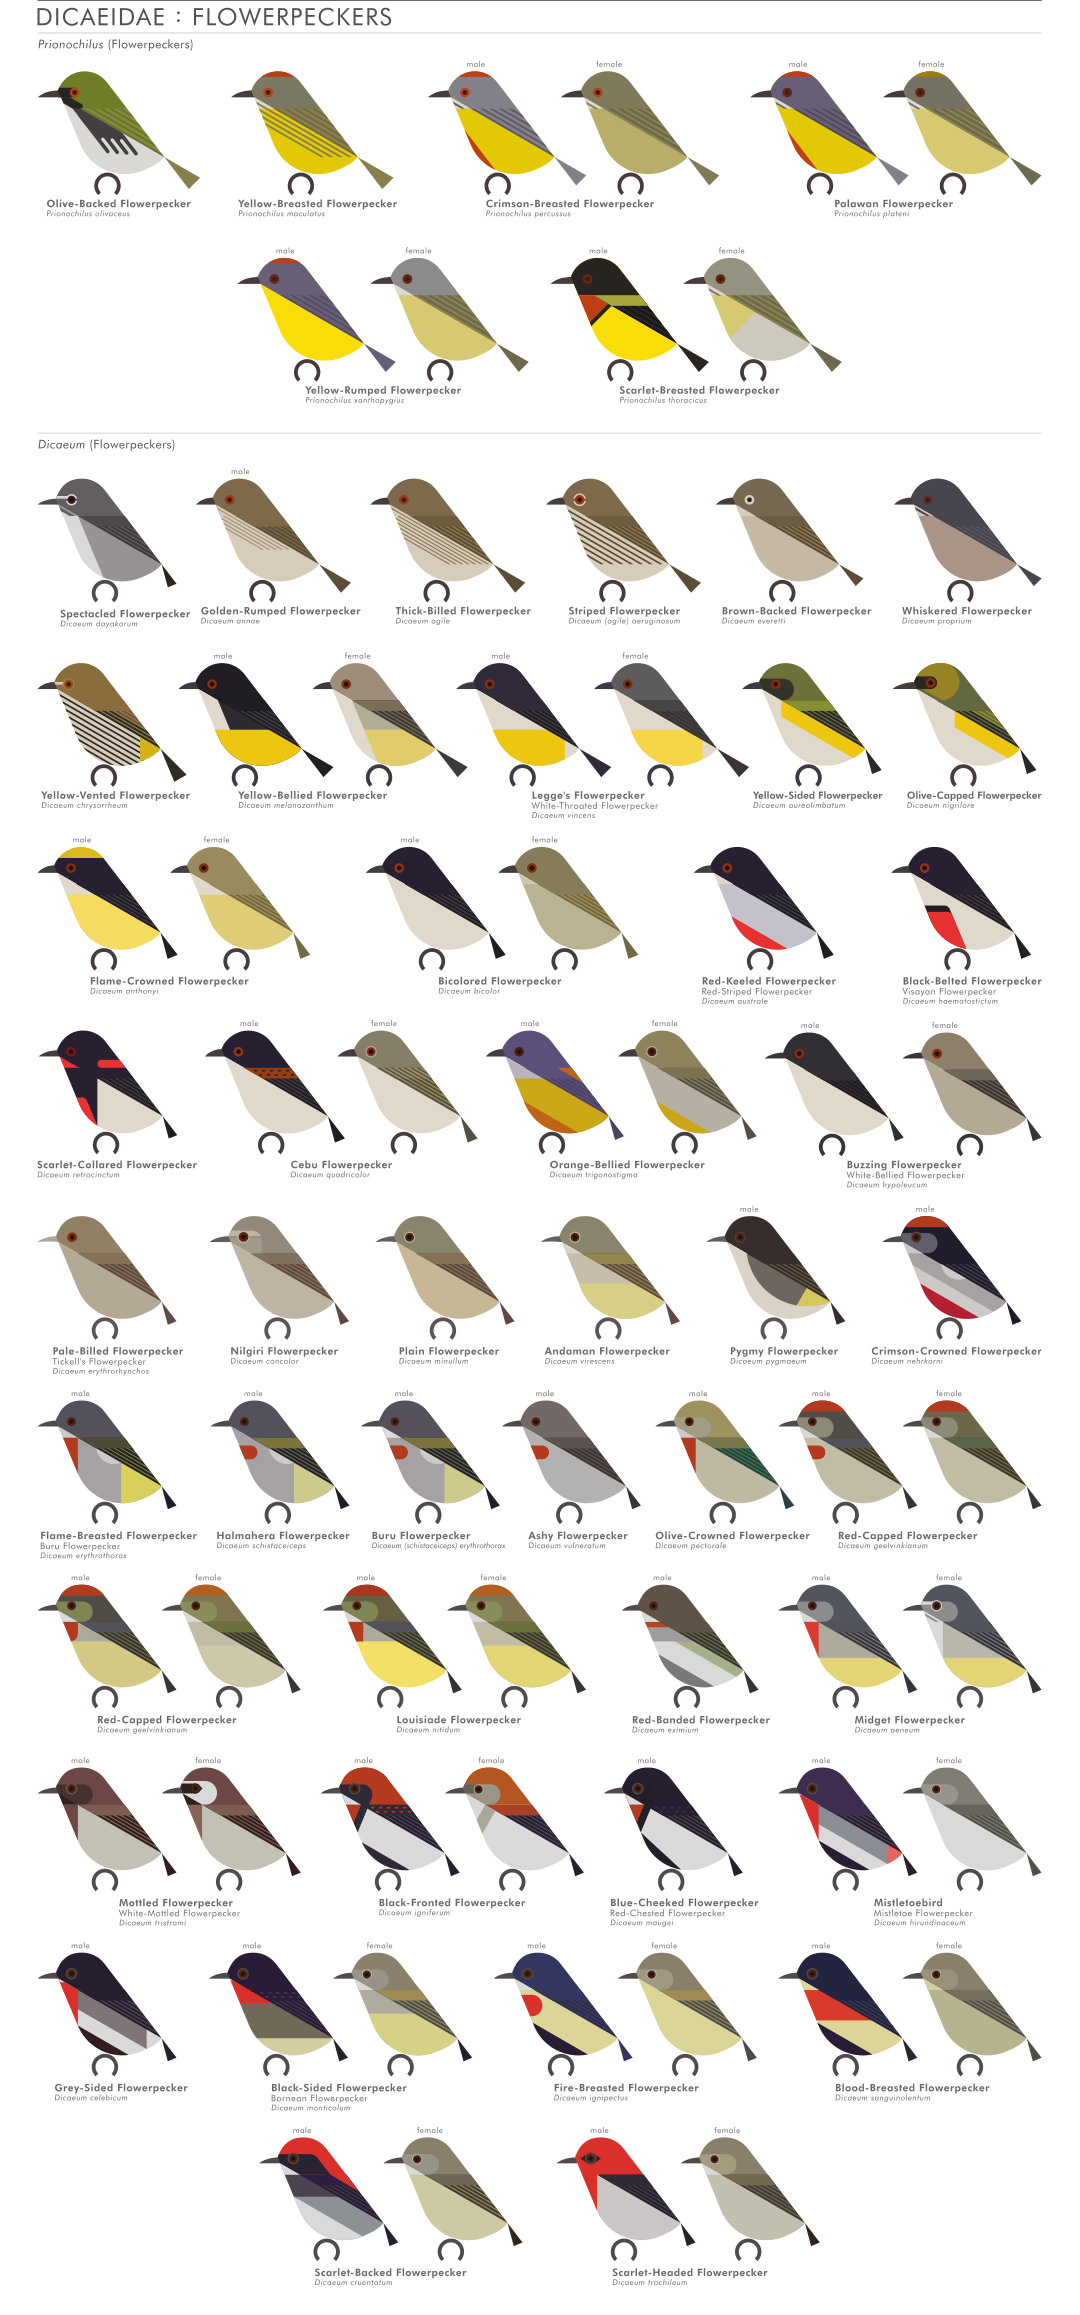 scott partridge - AVE - avian vector encyclopedia - flowerpeckers - bird vector art